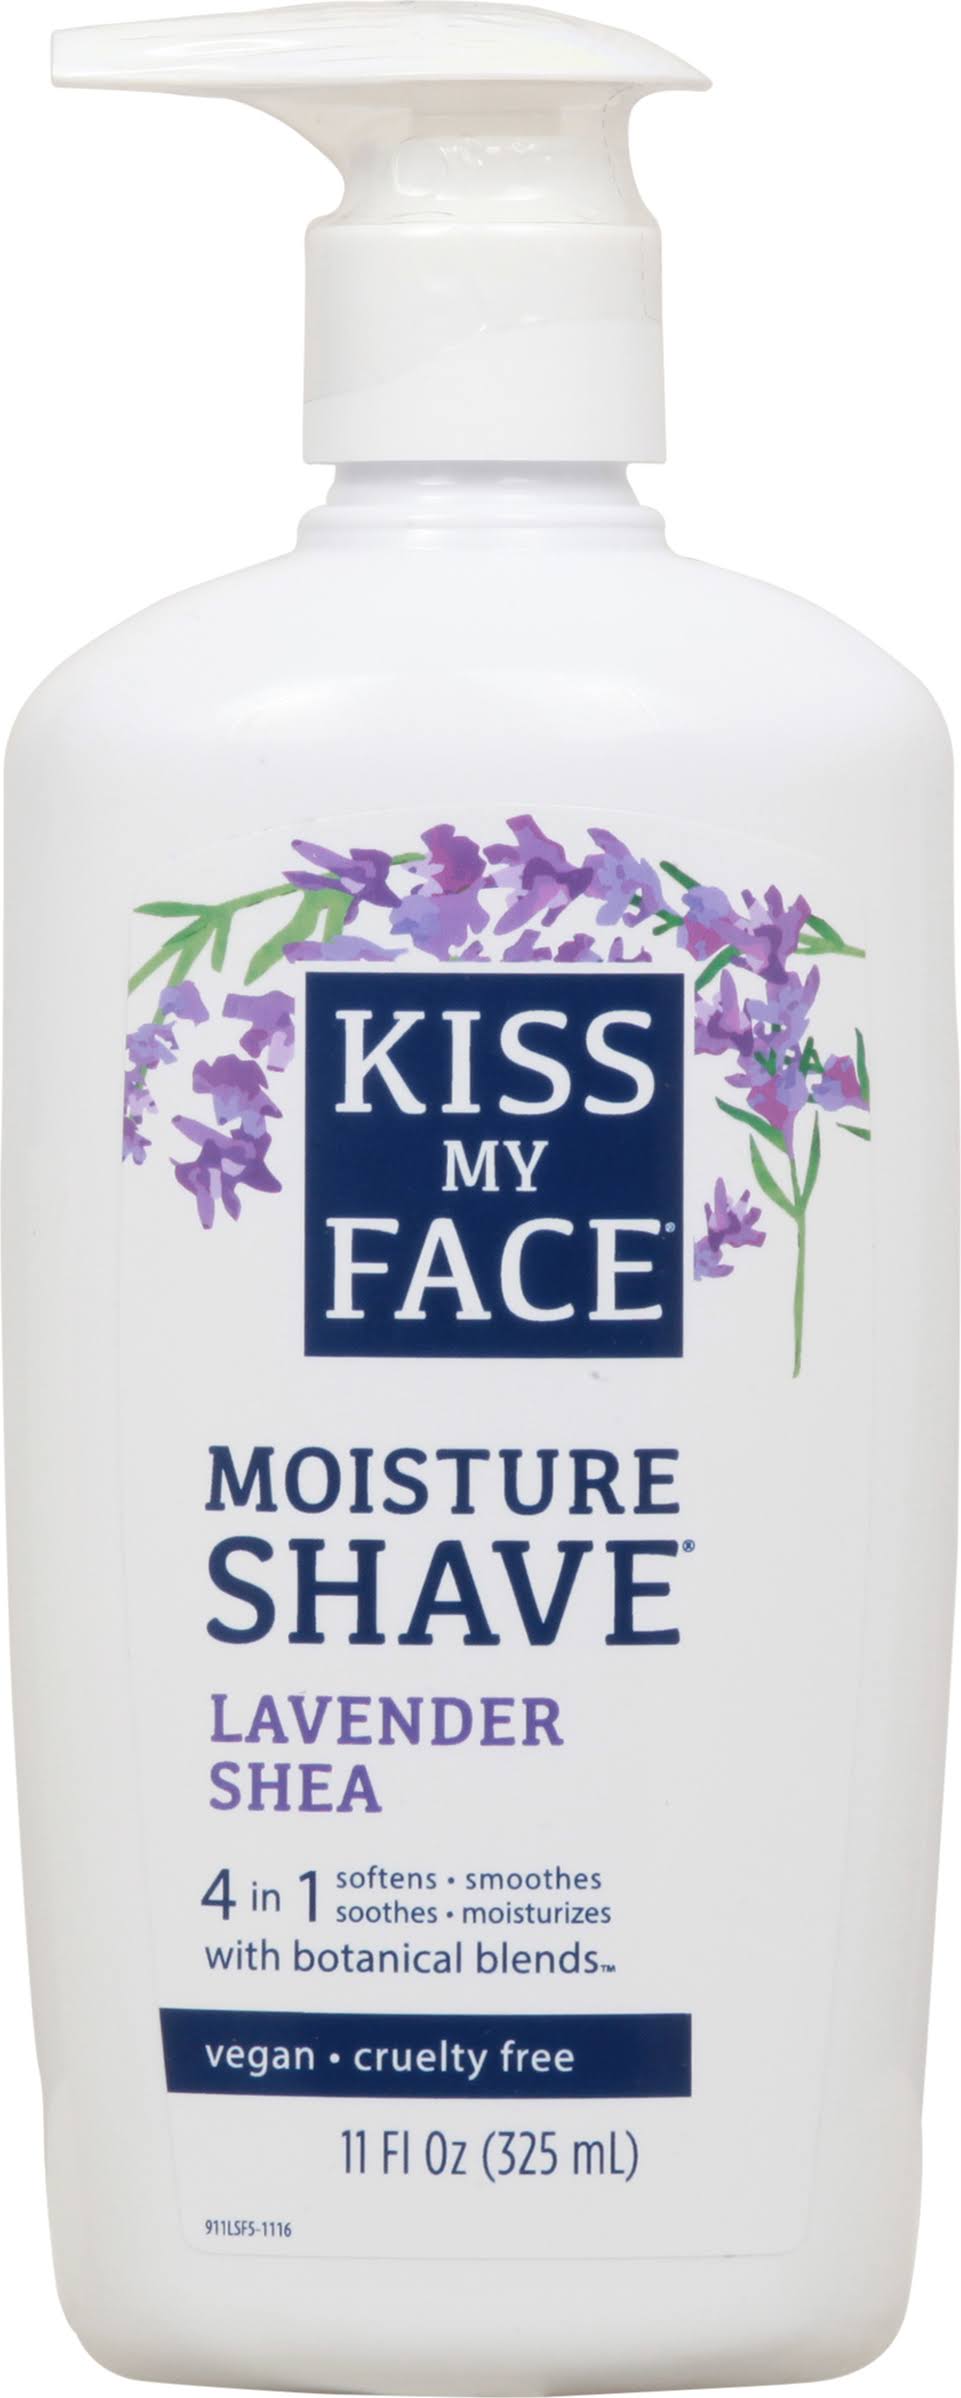 Kiss My Face Moisture Shave - Lavender Shea, 325ml